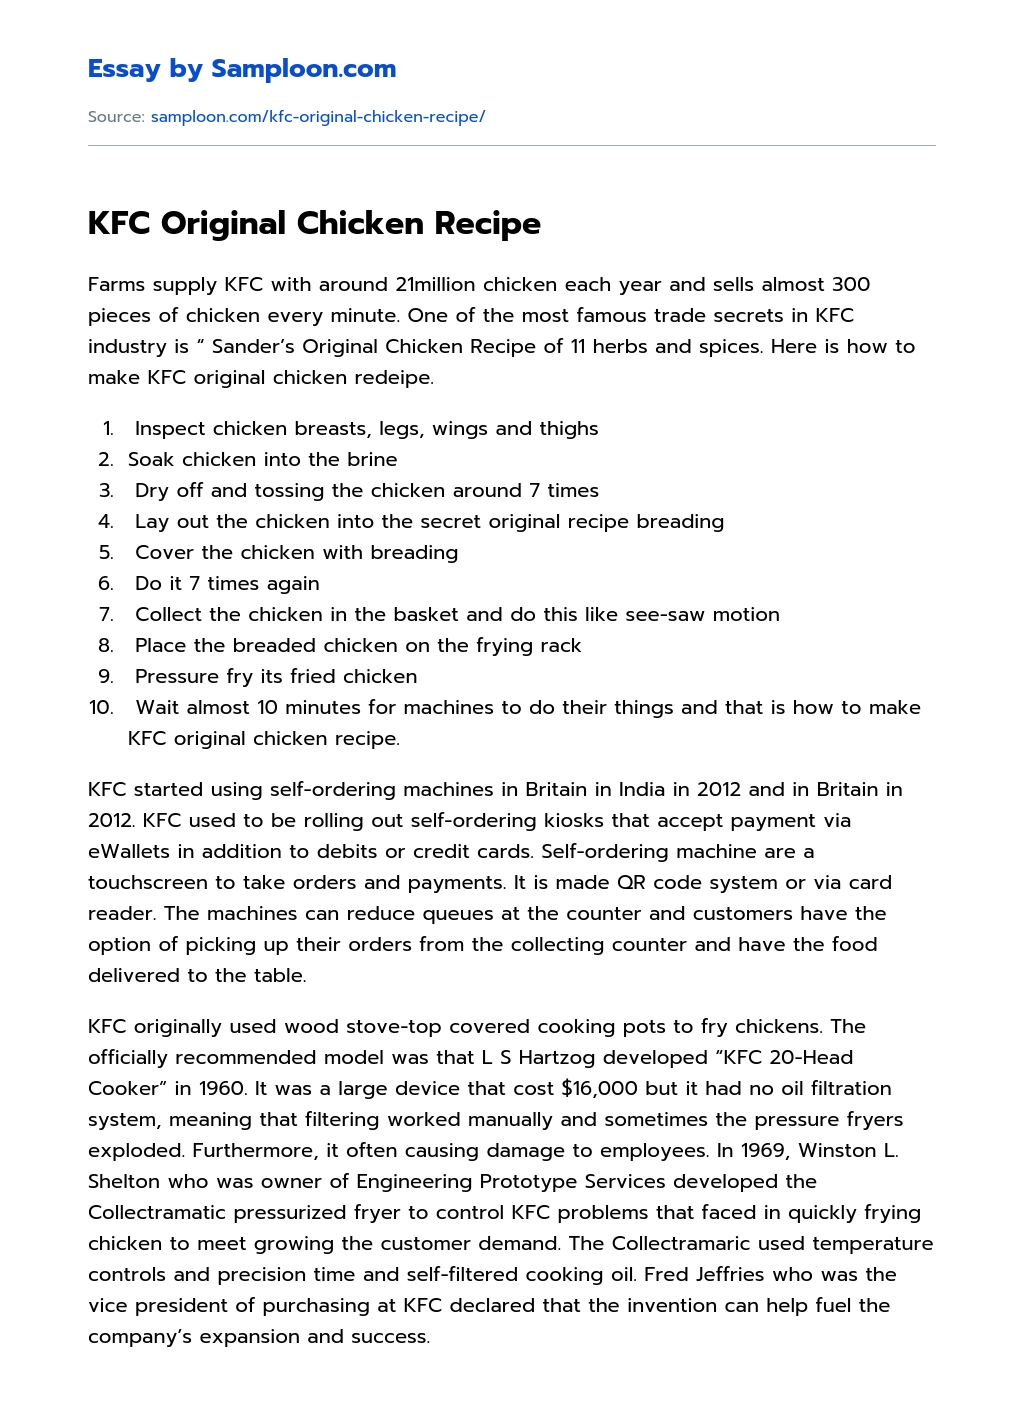 KFC Original Chicken Recipe essay